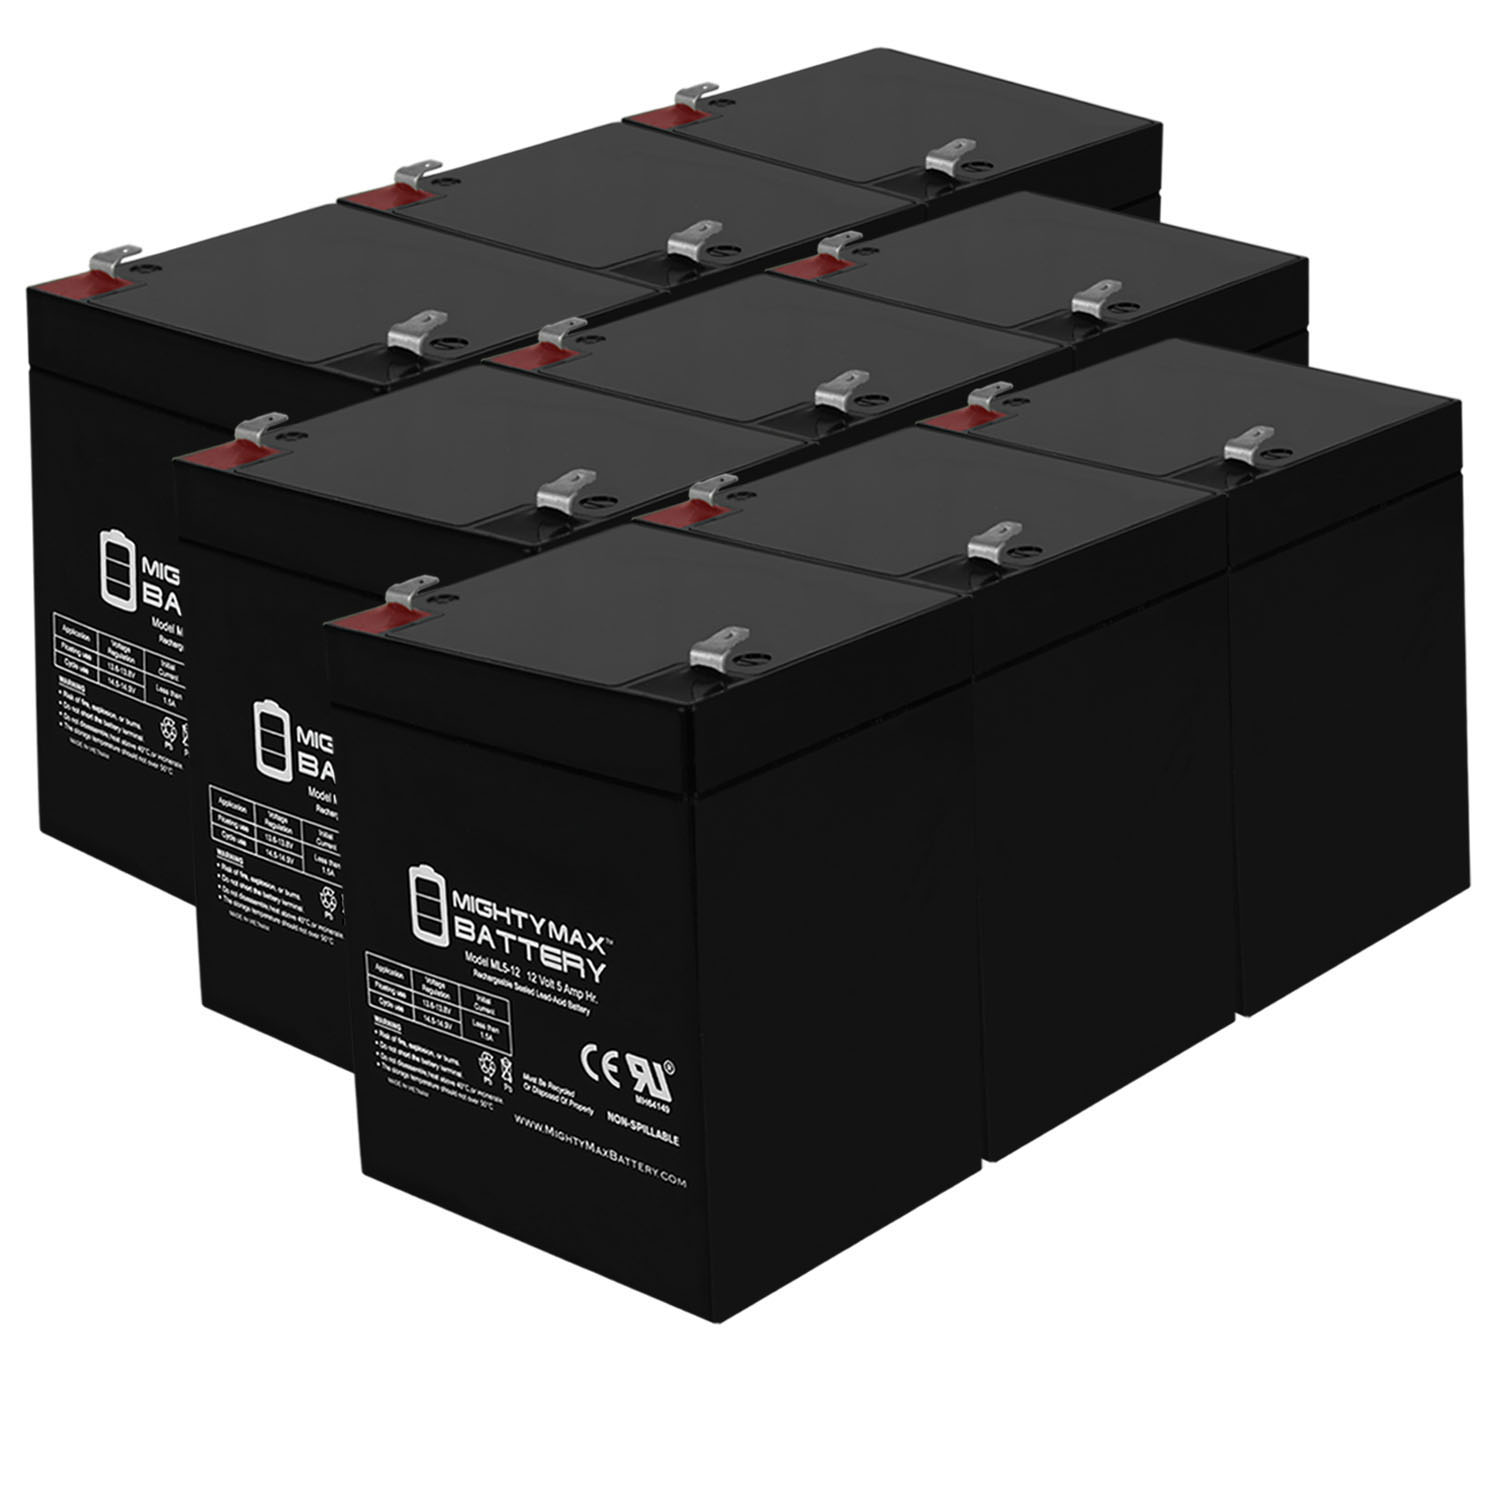 12V 5AH SLA Replacement Battery for Razor Razr MX350 - 9 Pack